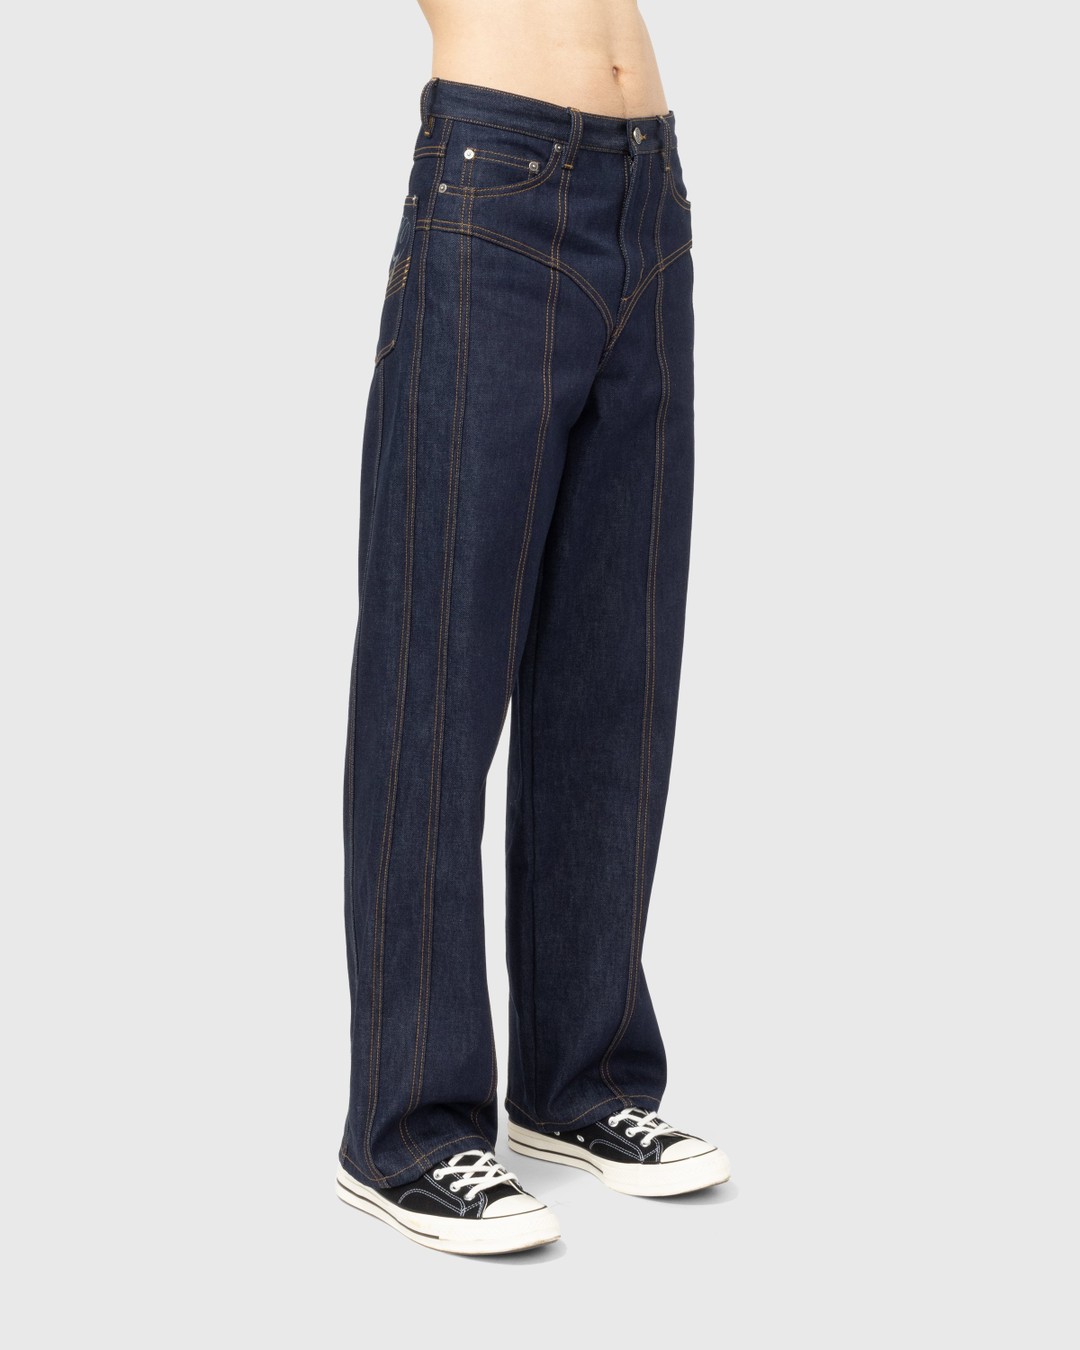 Jean Paul Gaultier – Raw Low-Rise Jeans Indigo - Denim - Blue - Image 2